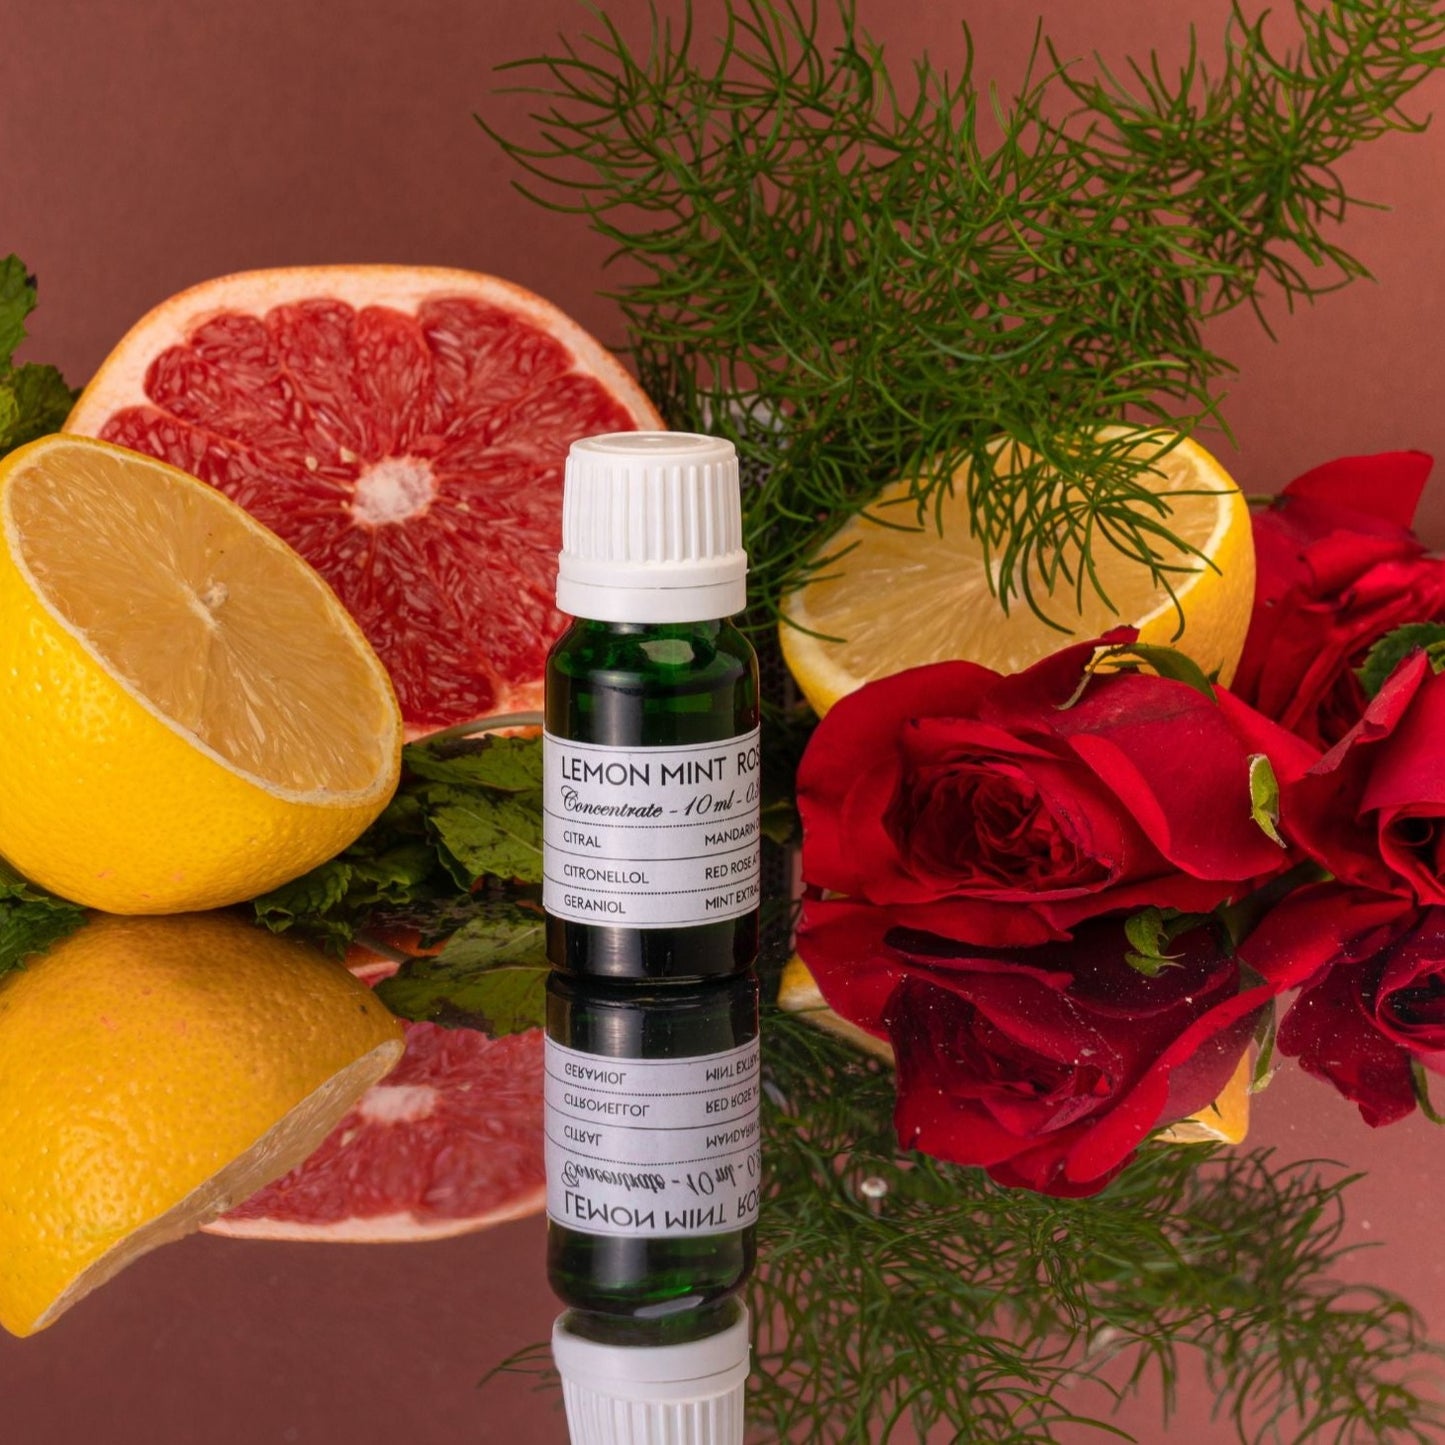 Mint Infused in Rose & Lemon Diffuser oil